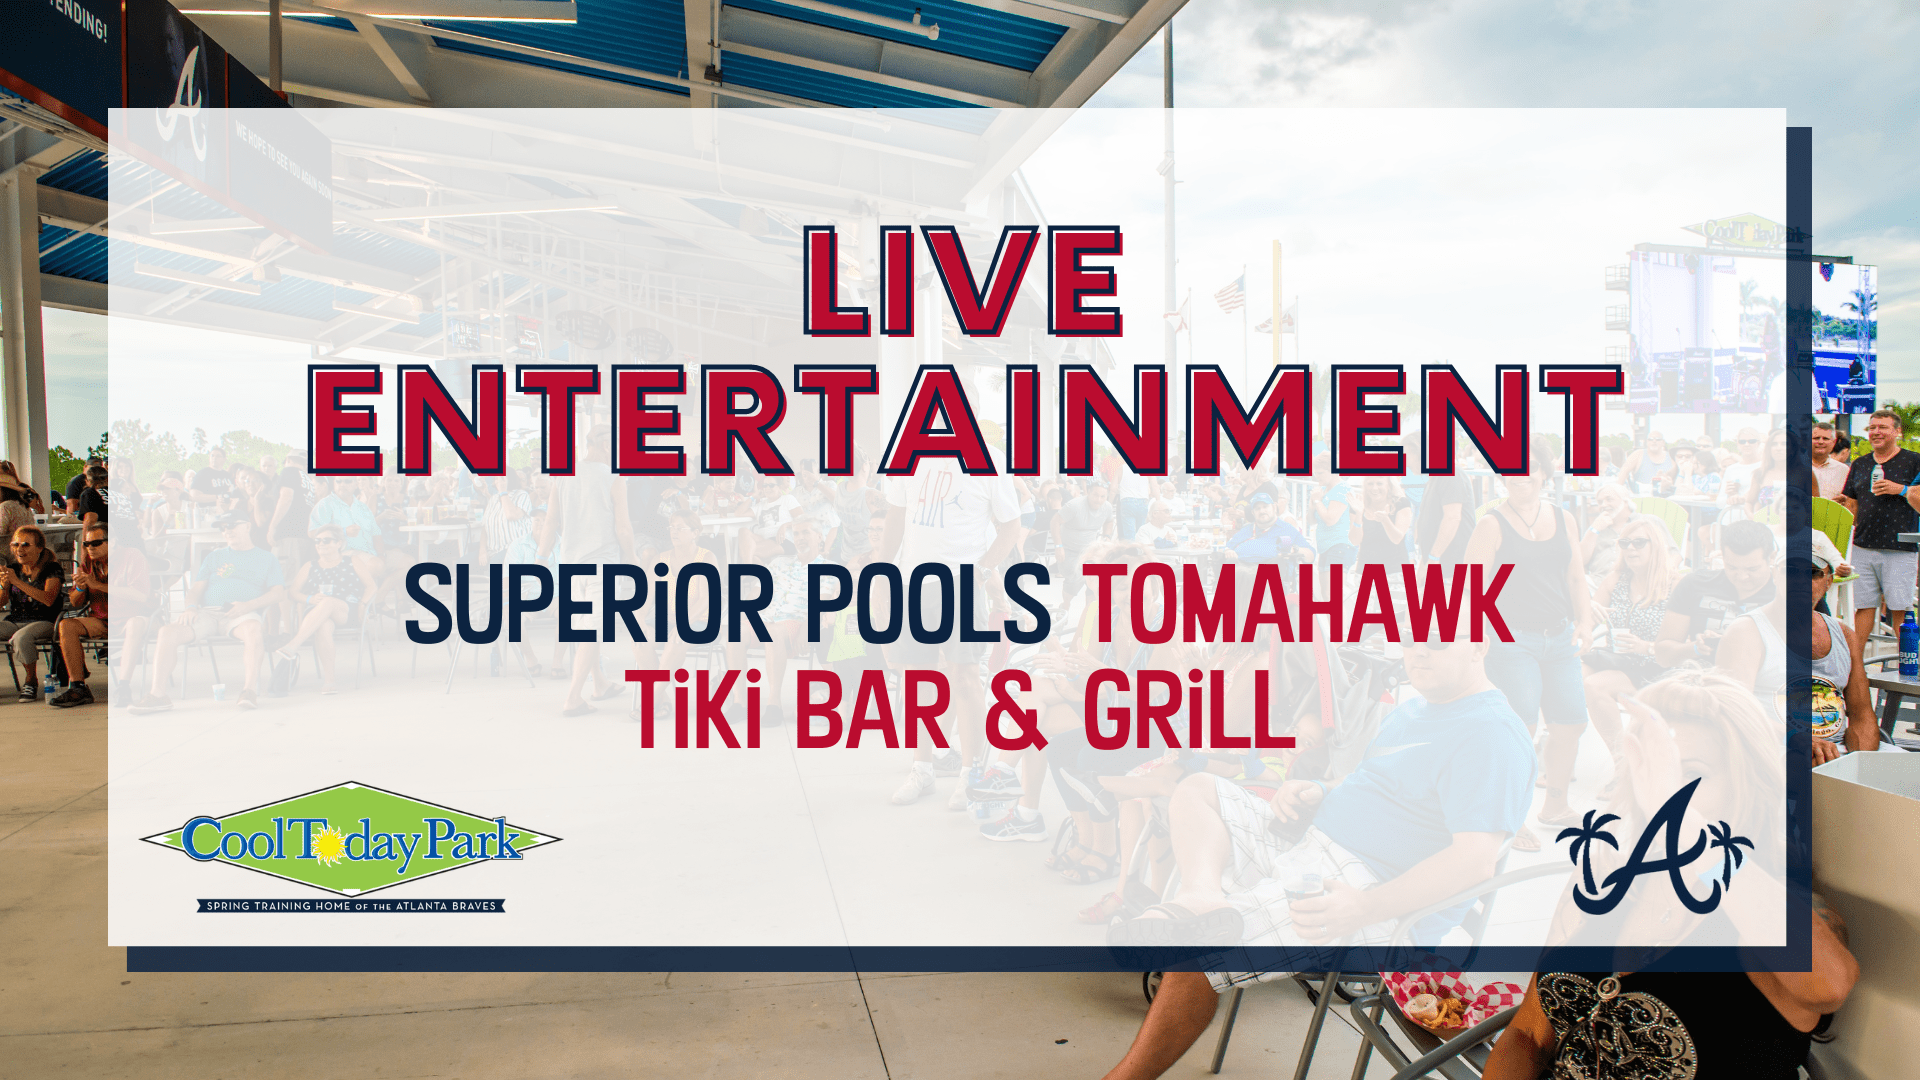 Live entertainment at the Superior Pools Tomahawk Tiki Bar & Grill